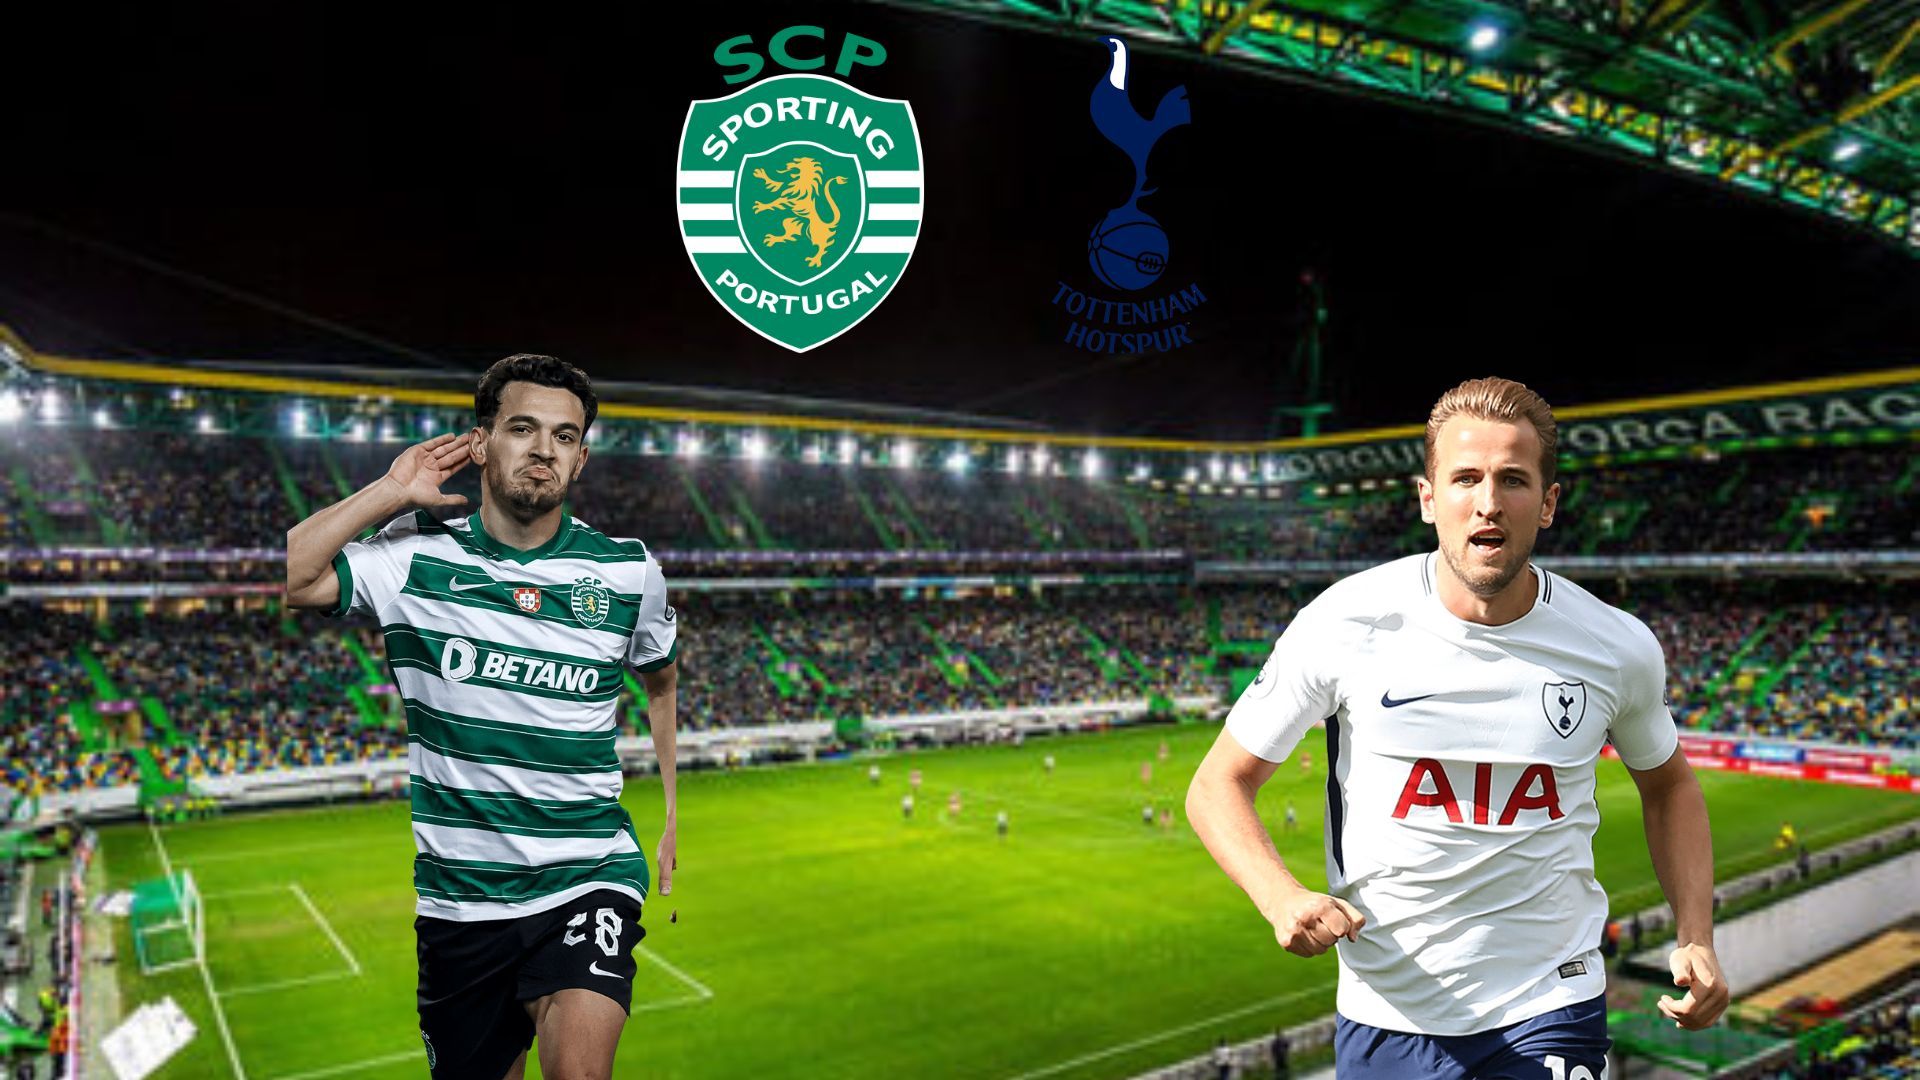 Sporting Portugal - Tottenham en directo | Champions League hoy en vivo